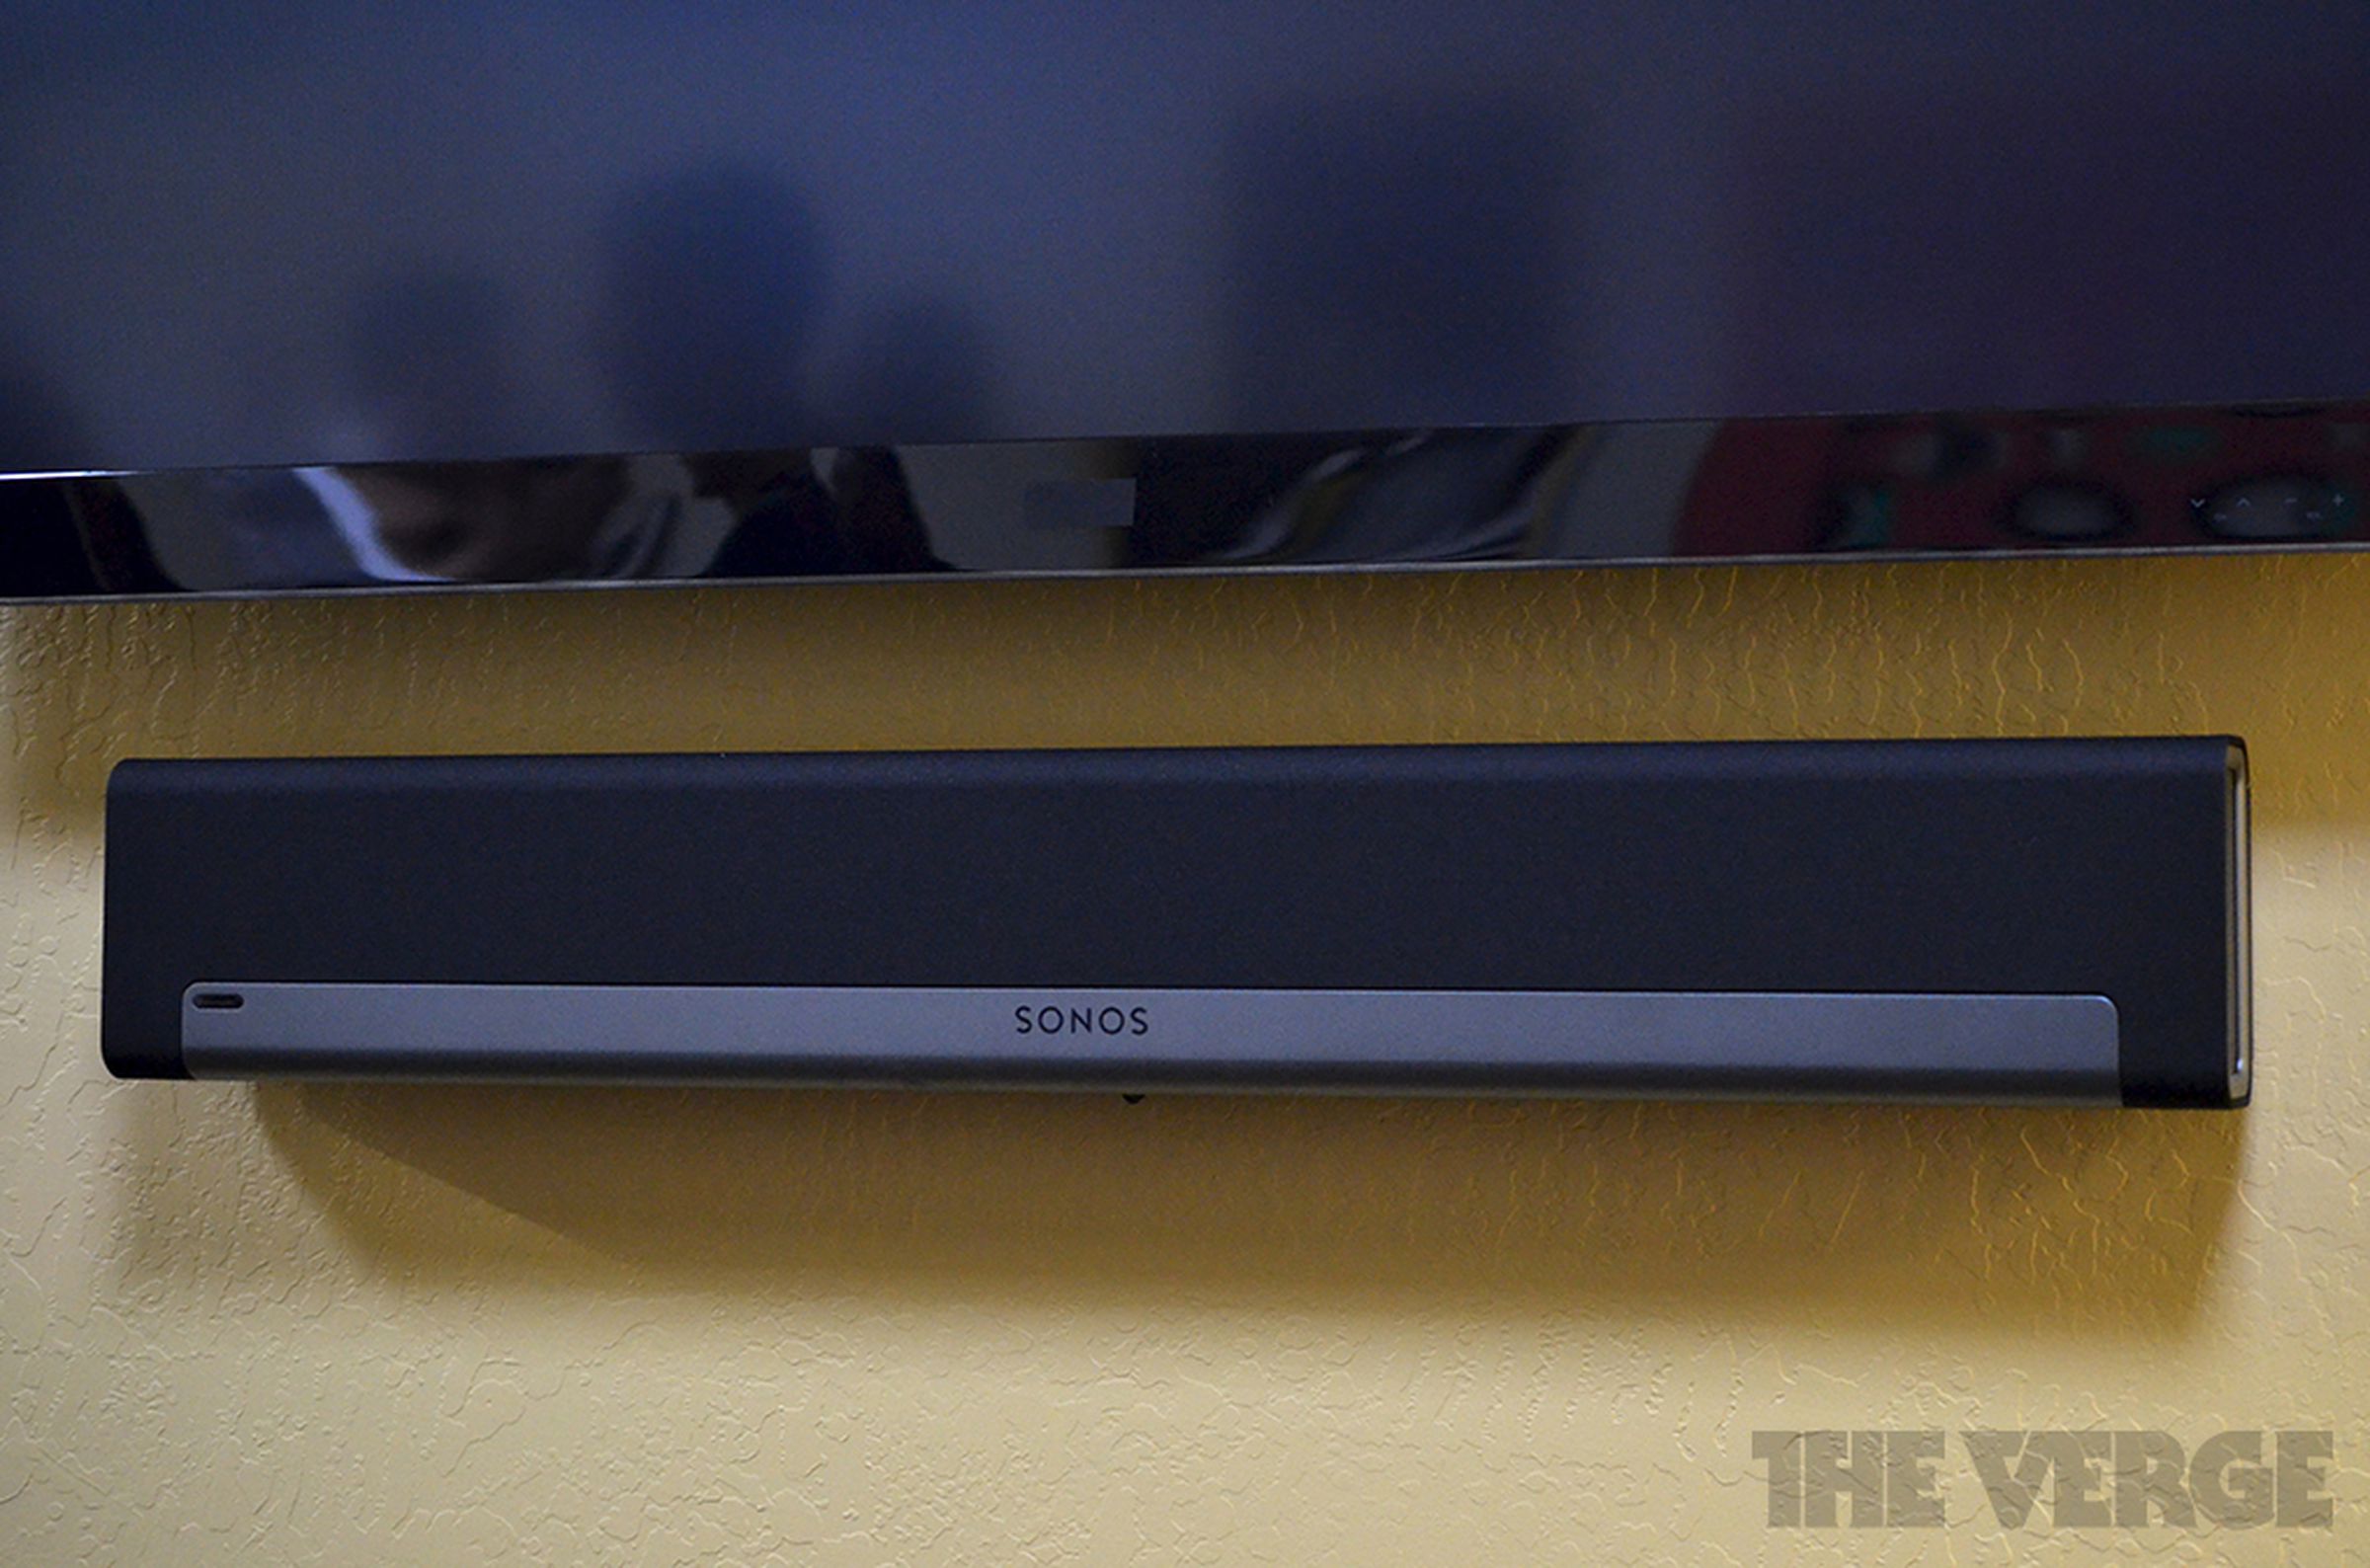 Sonos Playbar hands-on photos